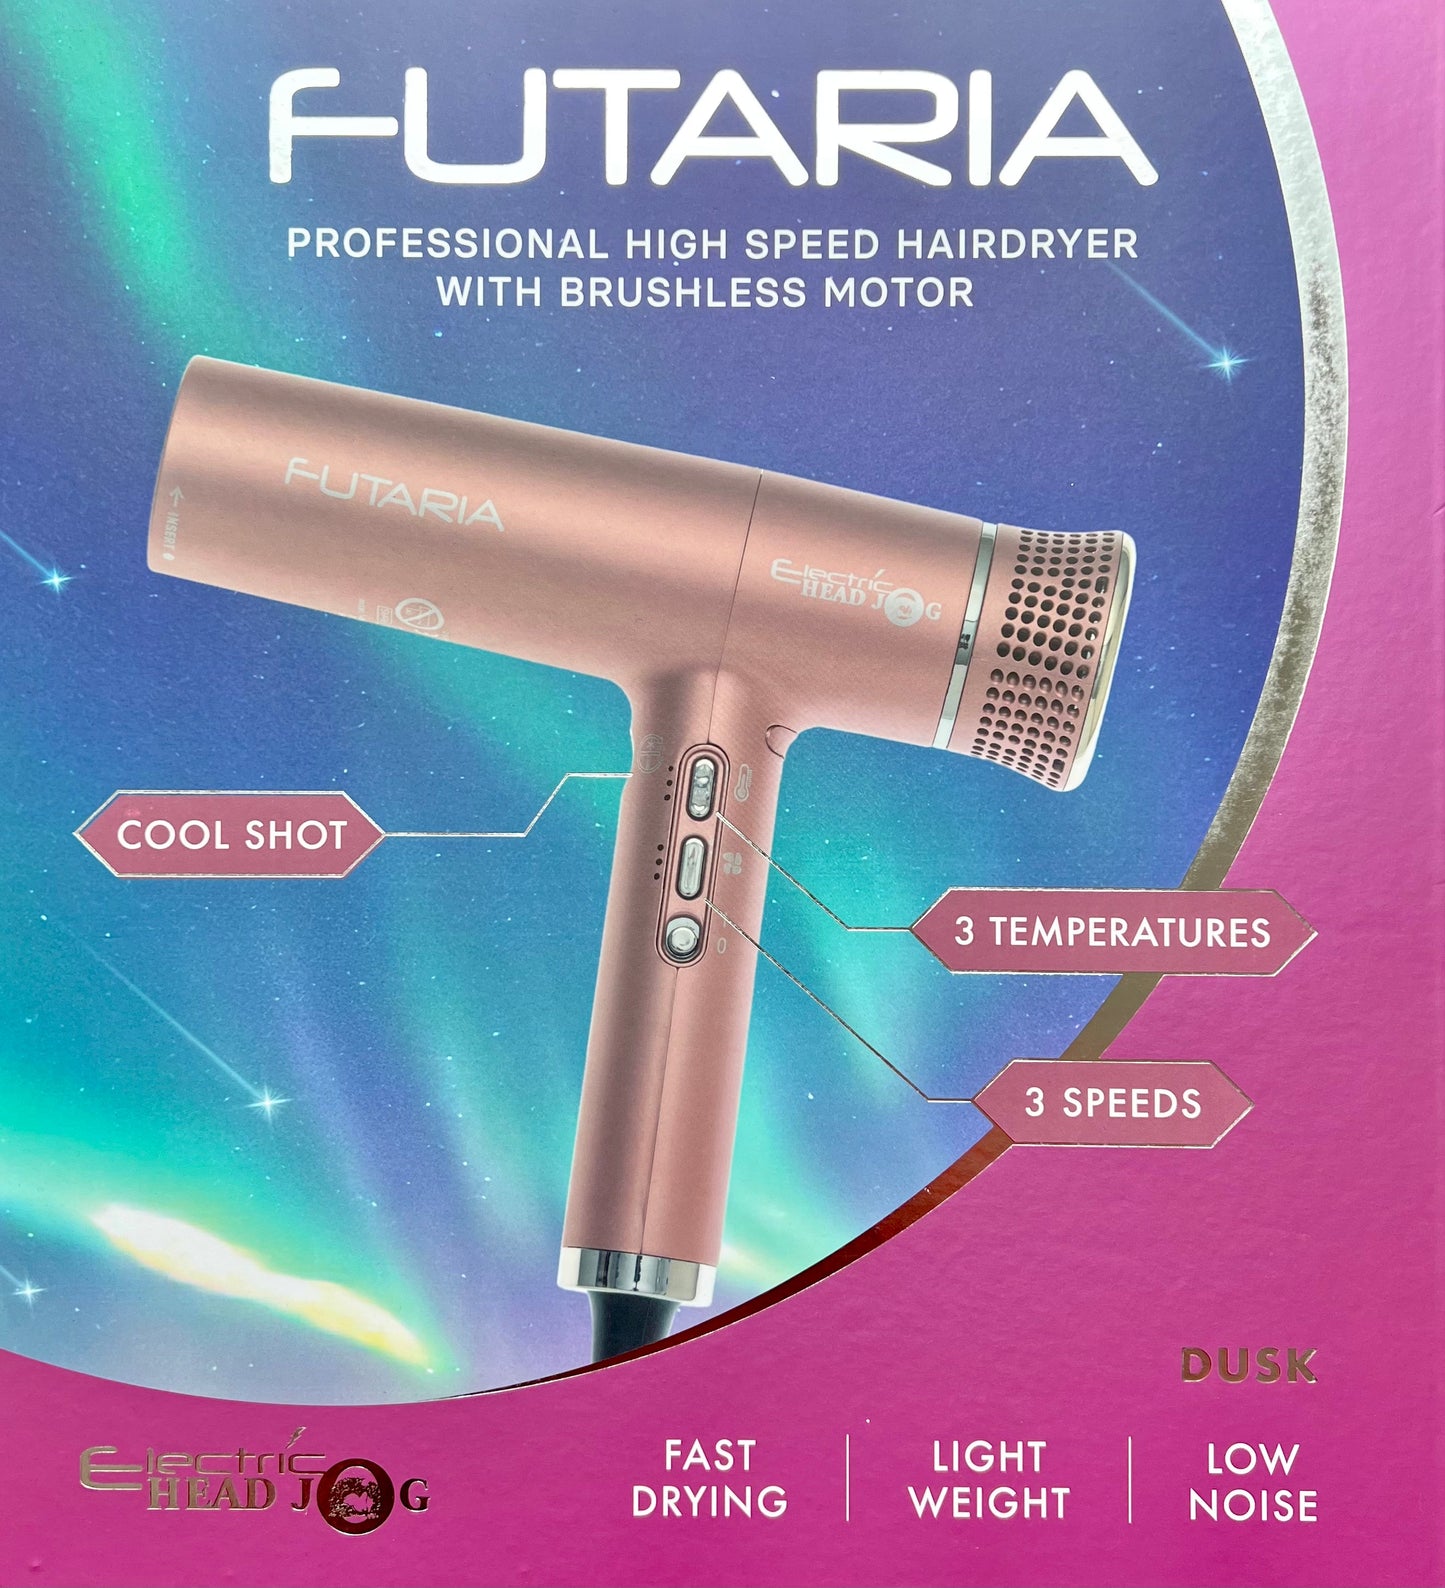 Head Jog Futaria Hair Dryer - Dusk Hair Dryer Head Jog 